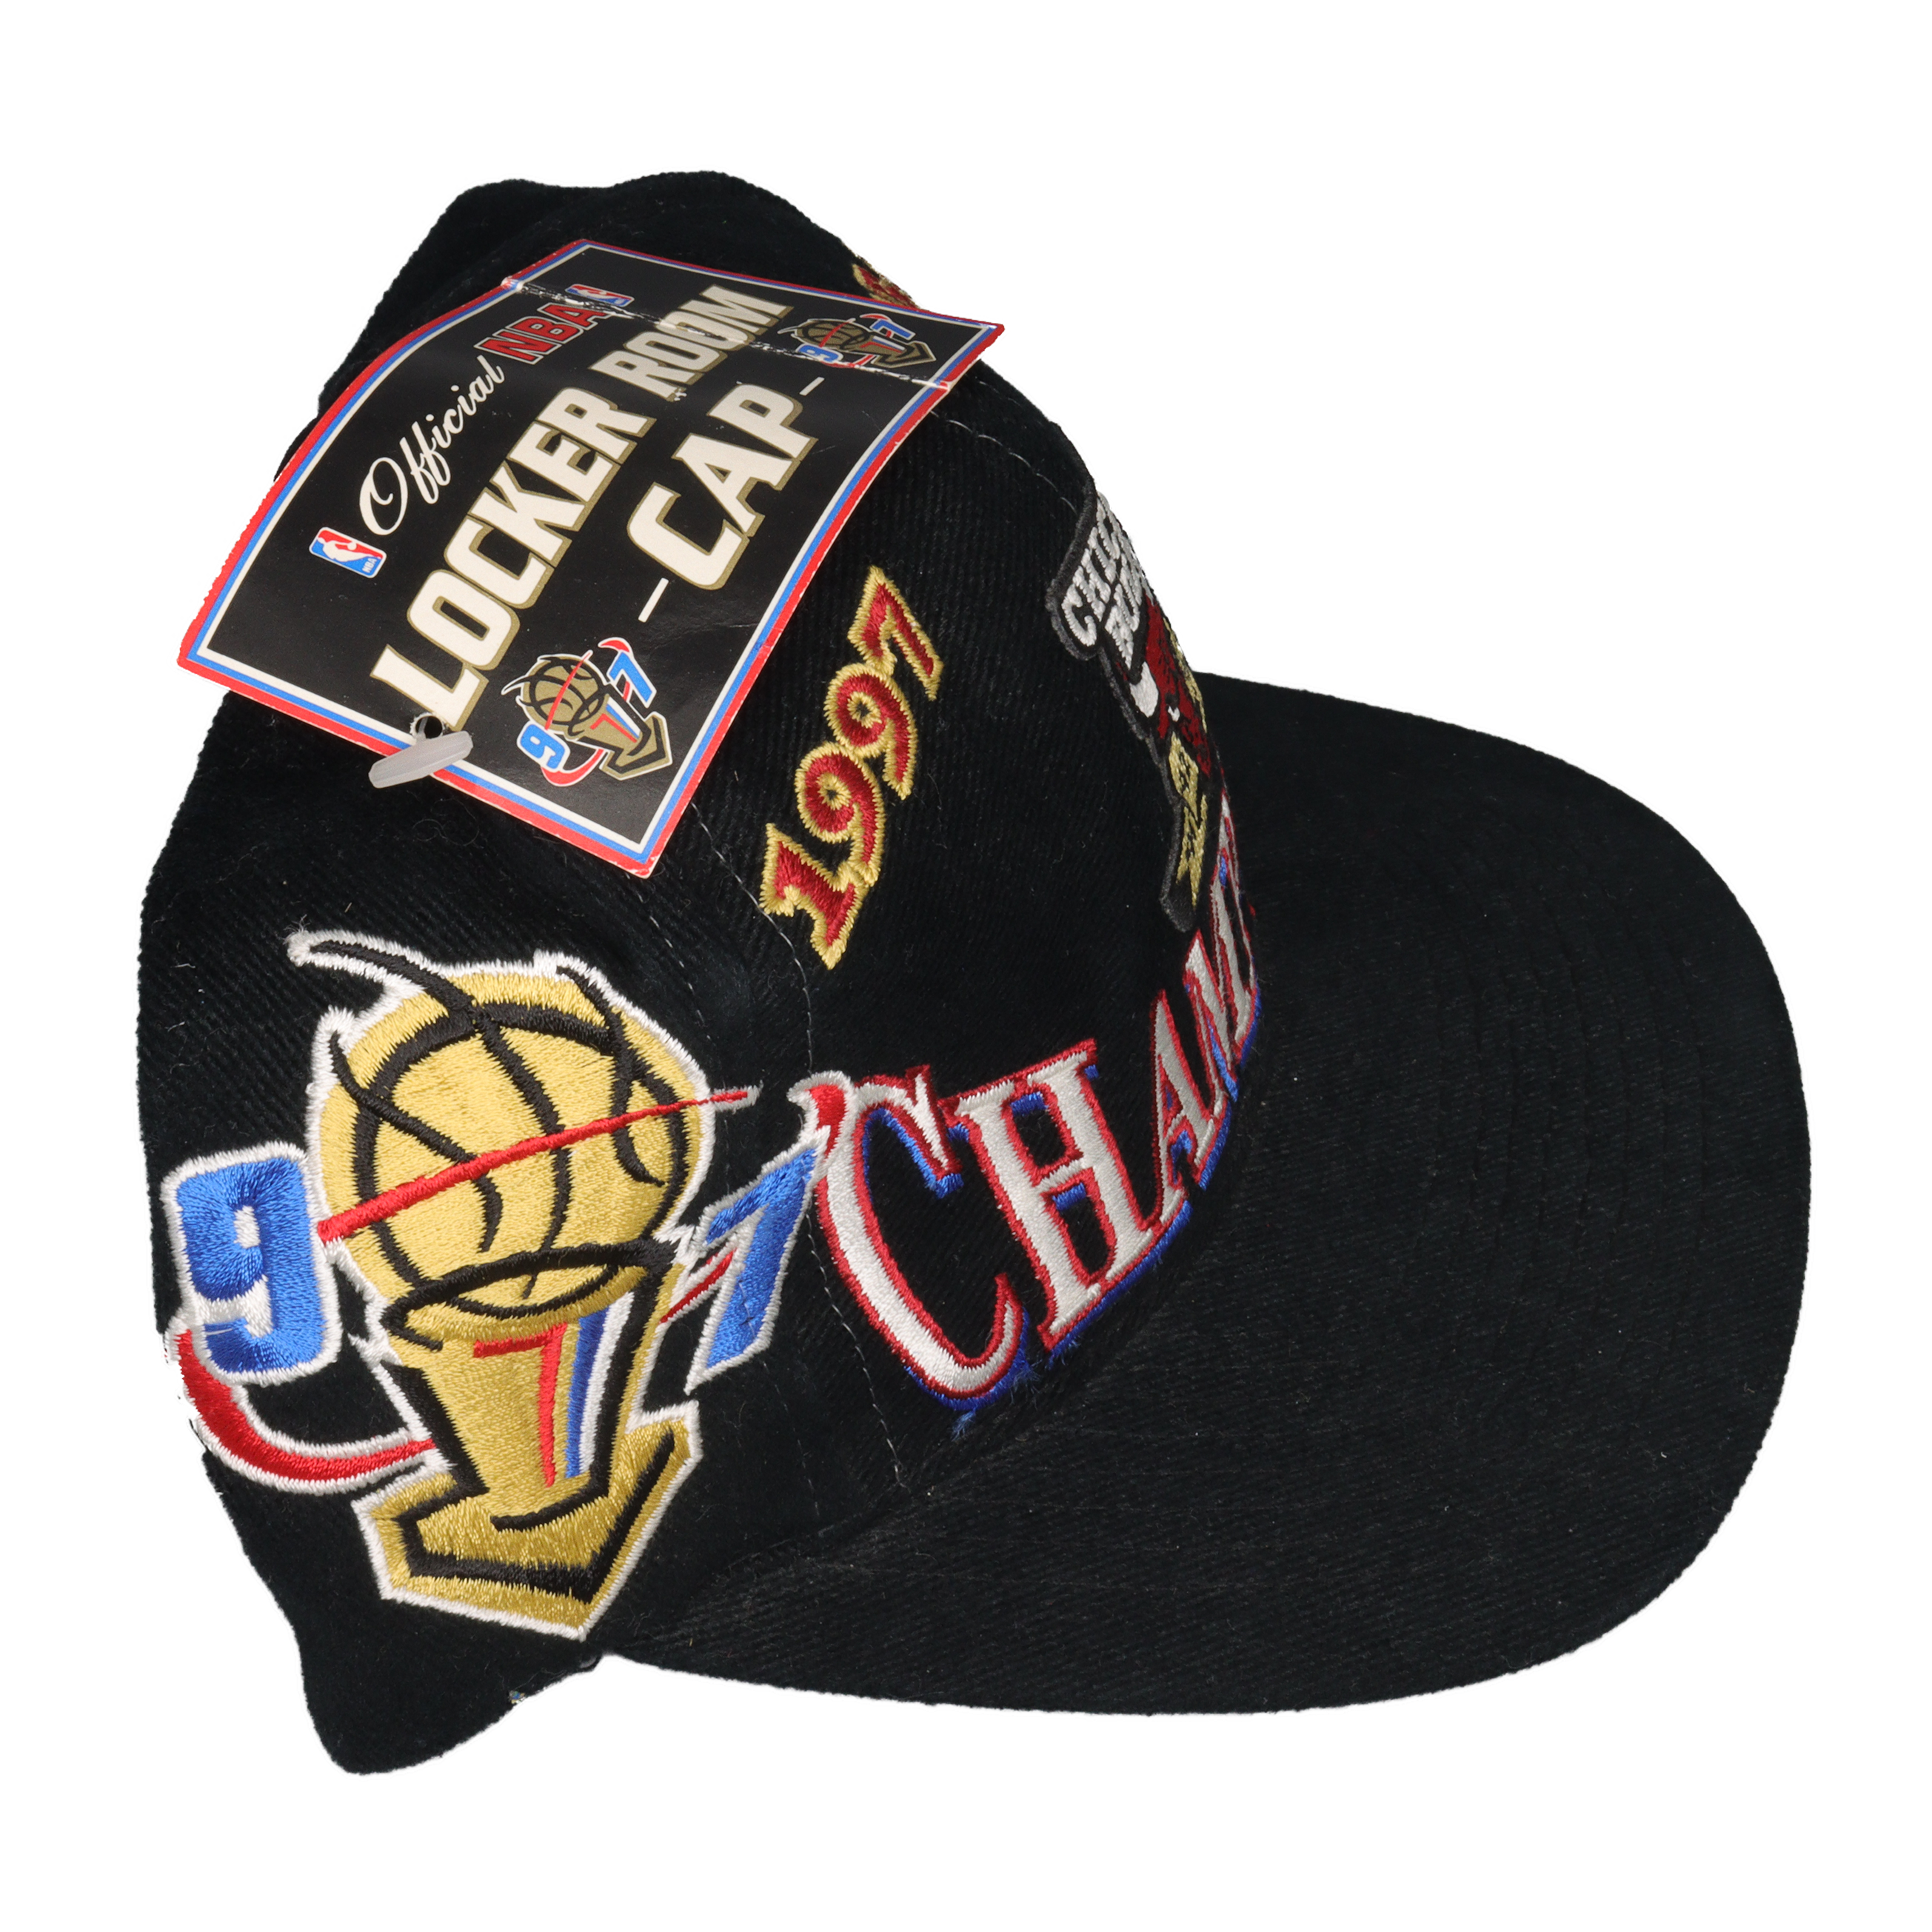 1997 bulls championship hat